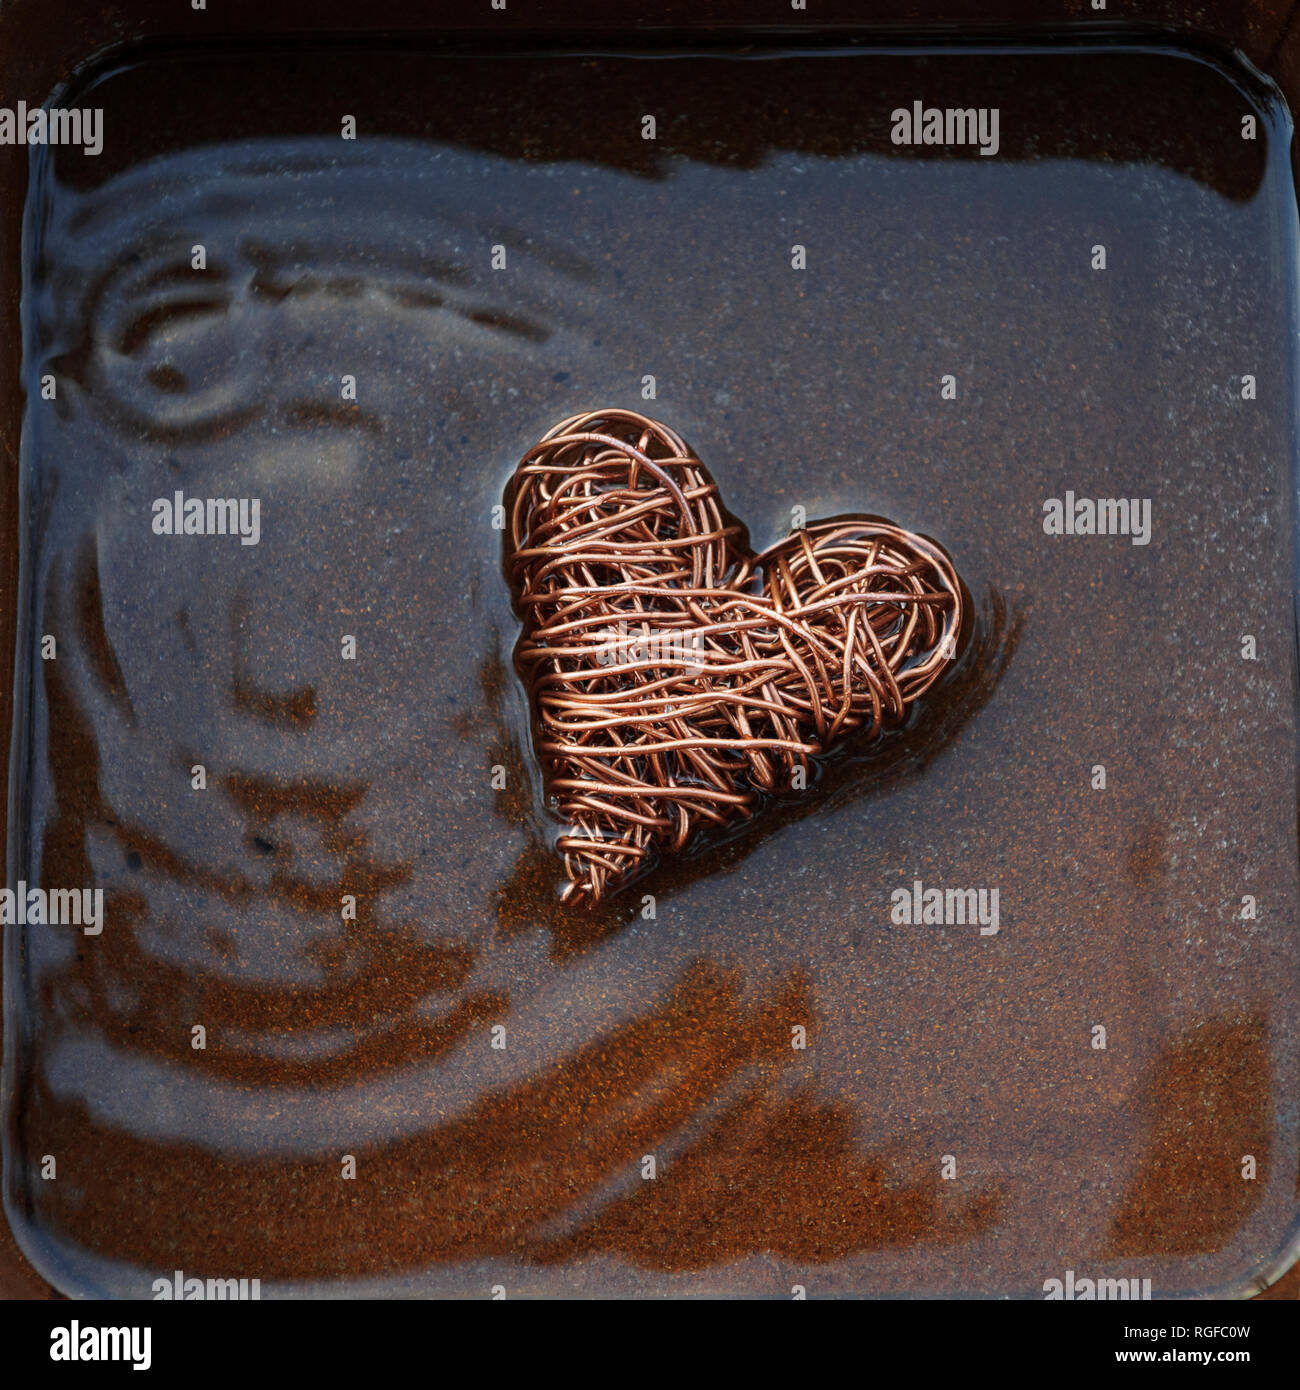 Corazón de alambre de cobre en aguas poco profundas con rizos concéntricos causada por las gotas de agua. Foto de stock